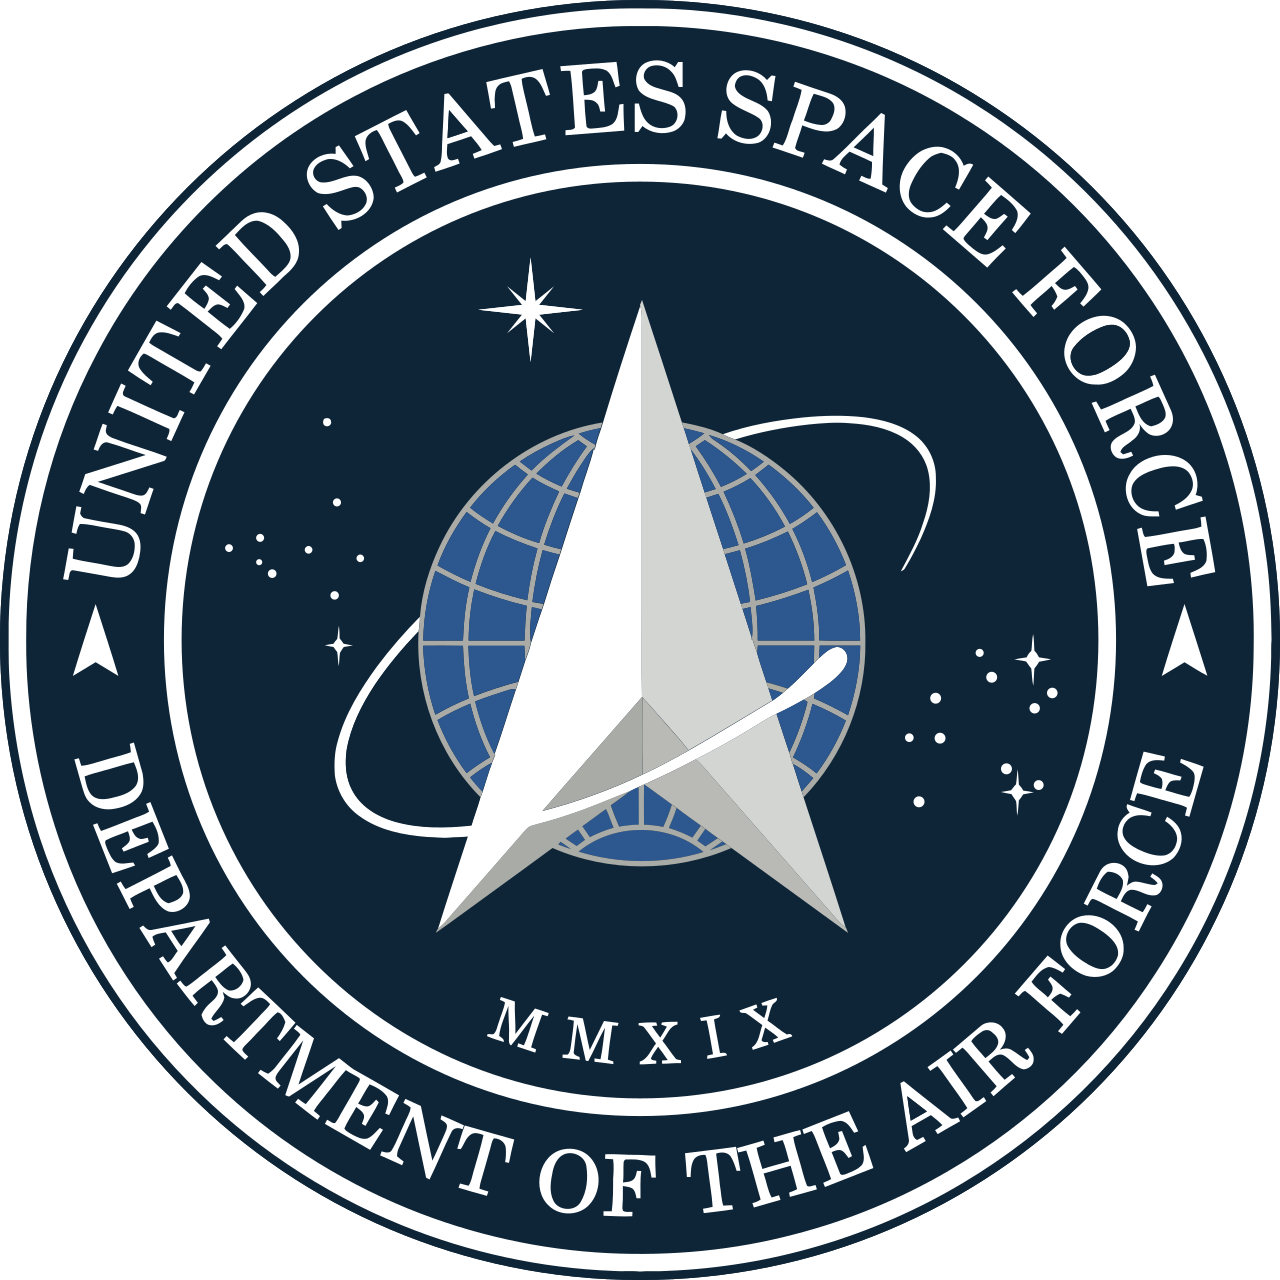 U.S. Department of Defense - U.S. Space Command - CCSFS - Cape Canaveral Space Force Station - Space Coast - База Космических сил на мысе Канаверал